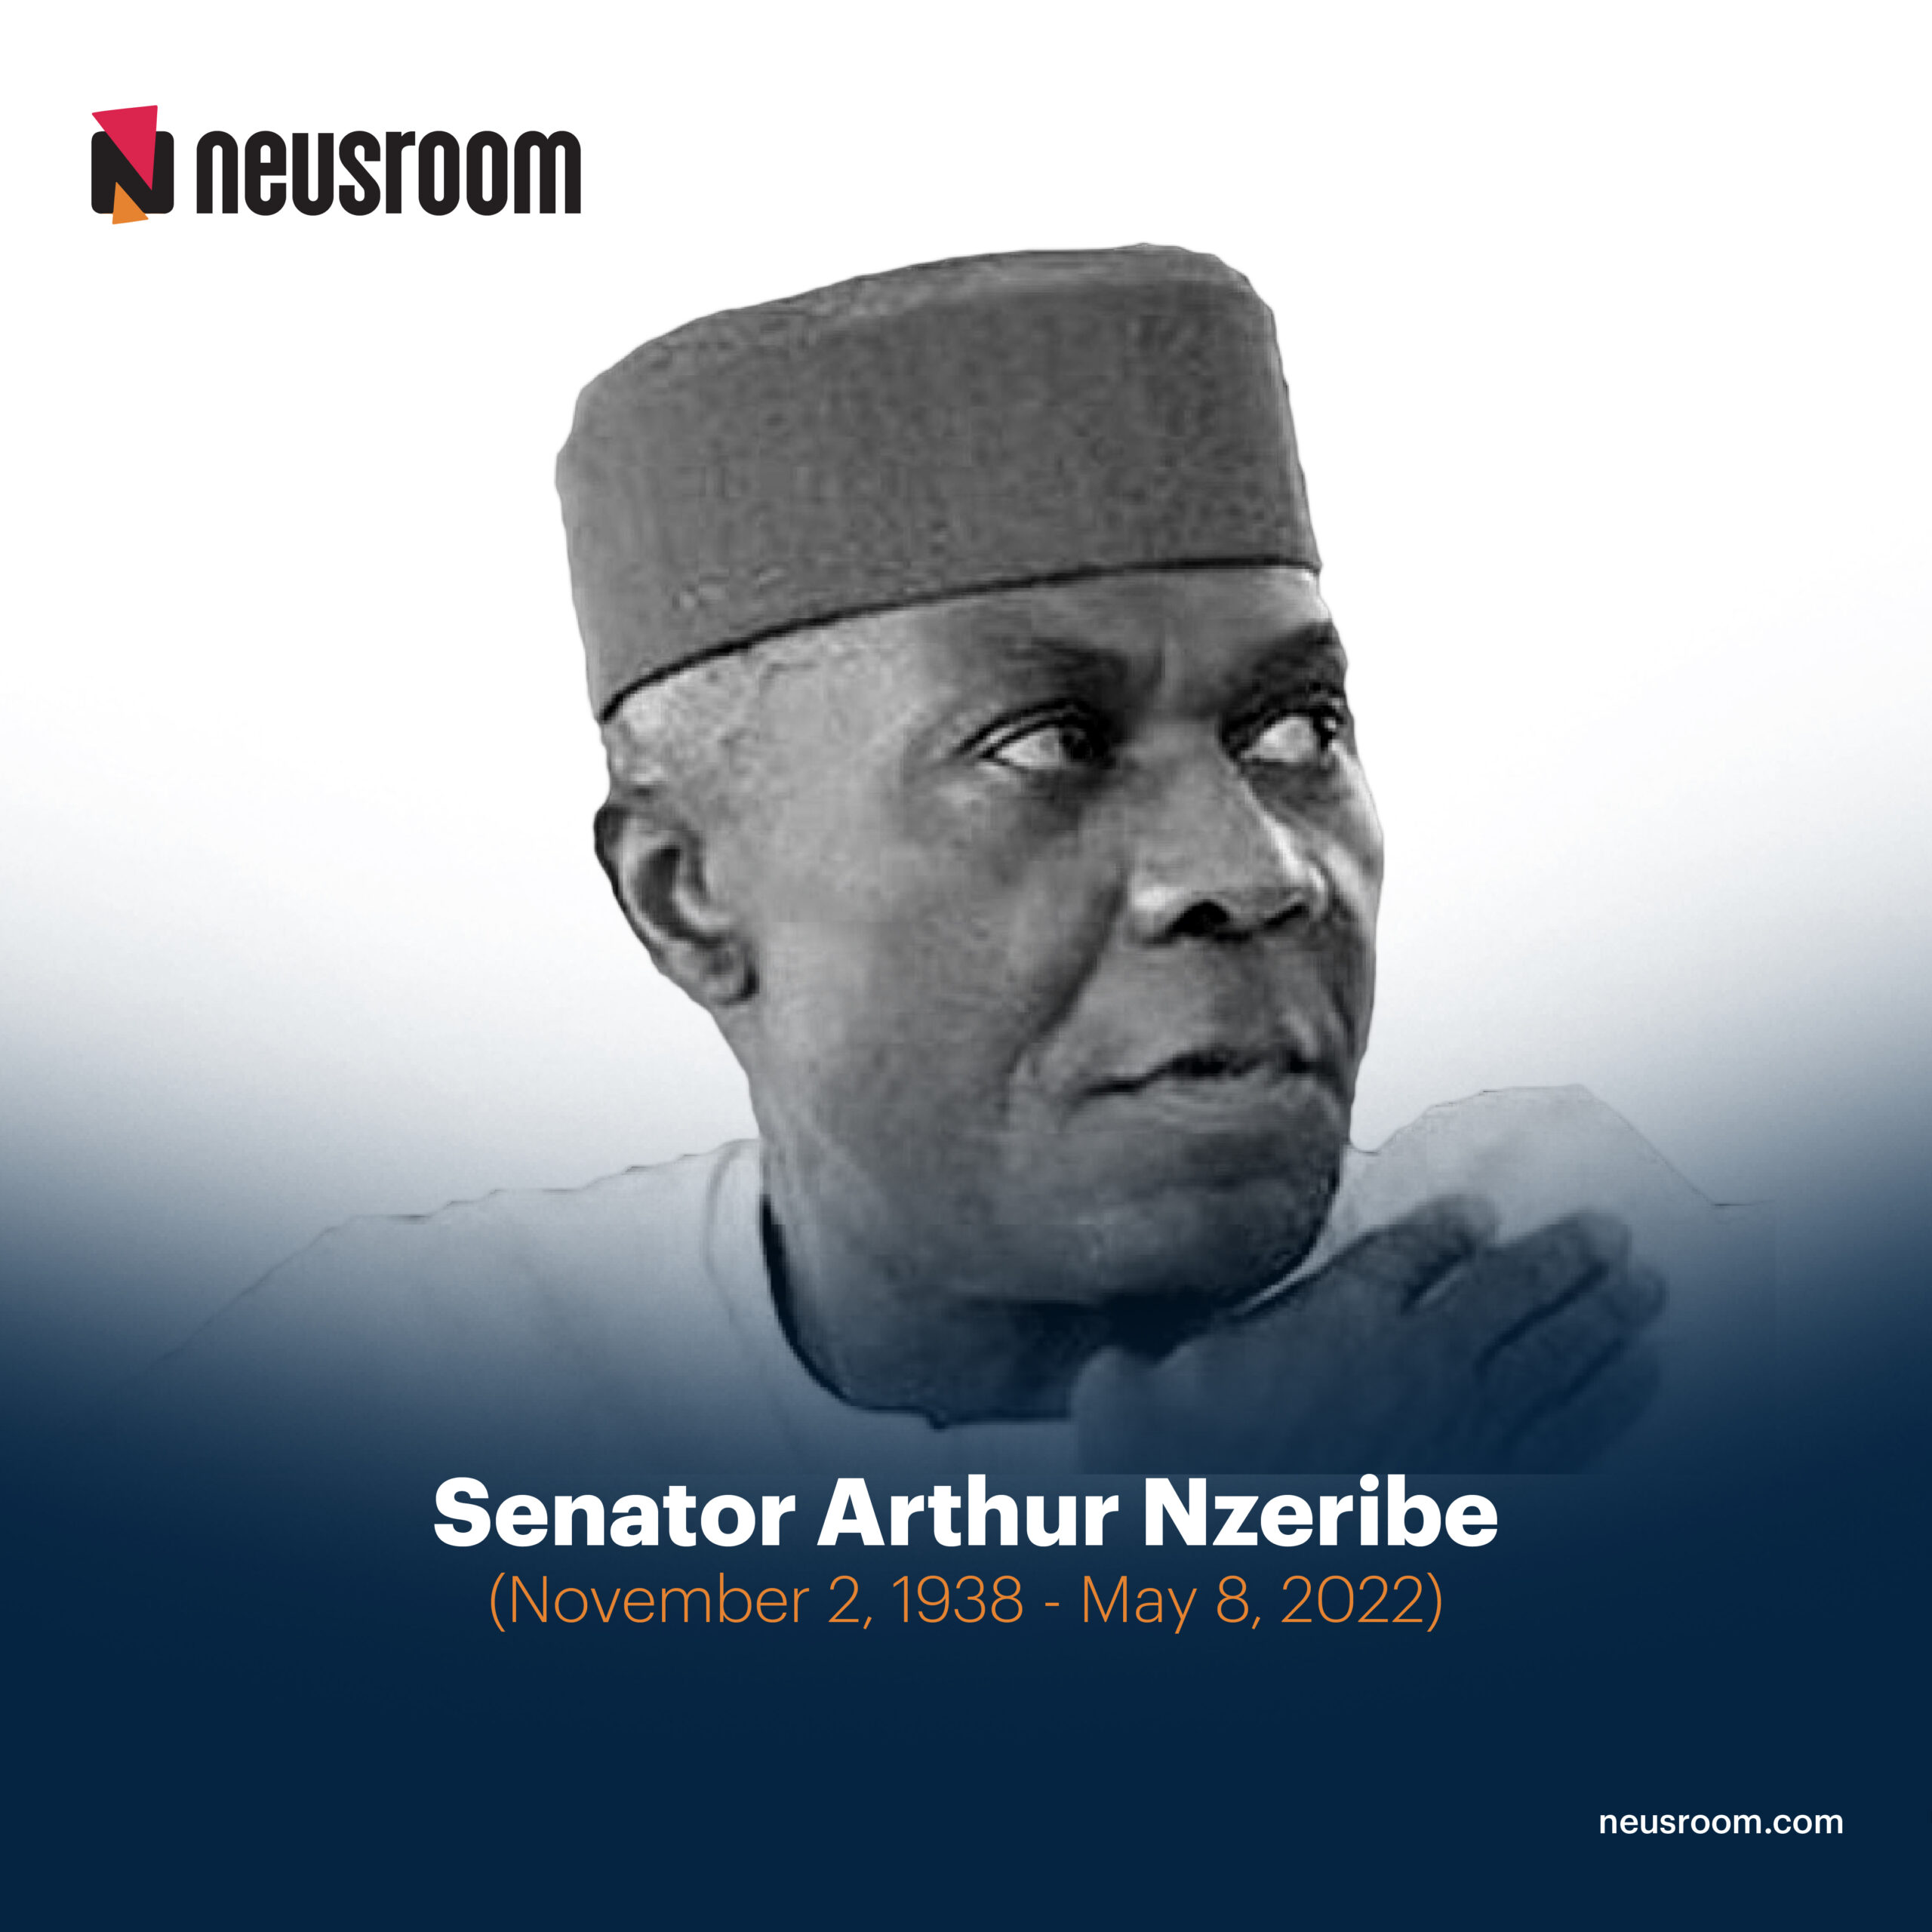 biography of arthur nzeribe